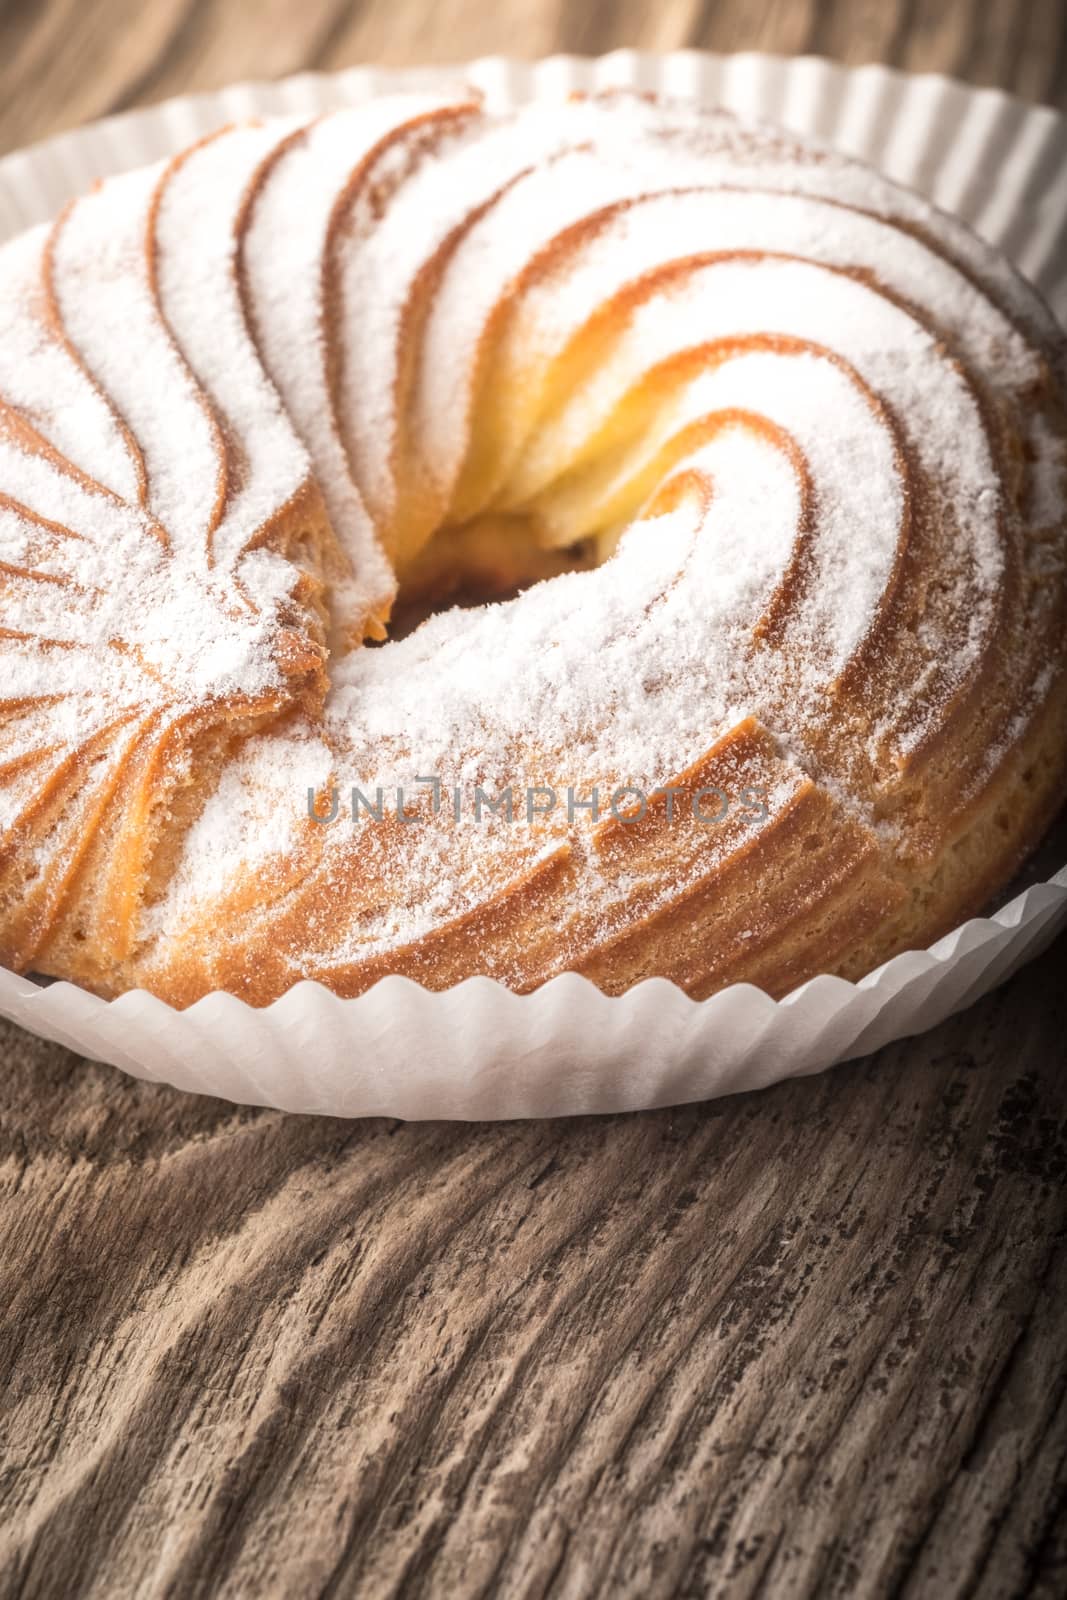 Cake in powdered sugar on a wooden table by Deniskarpenkov